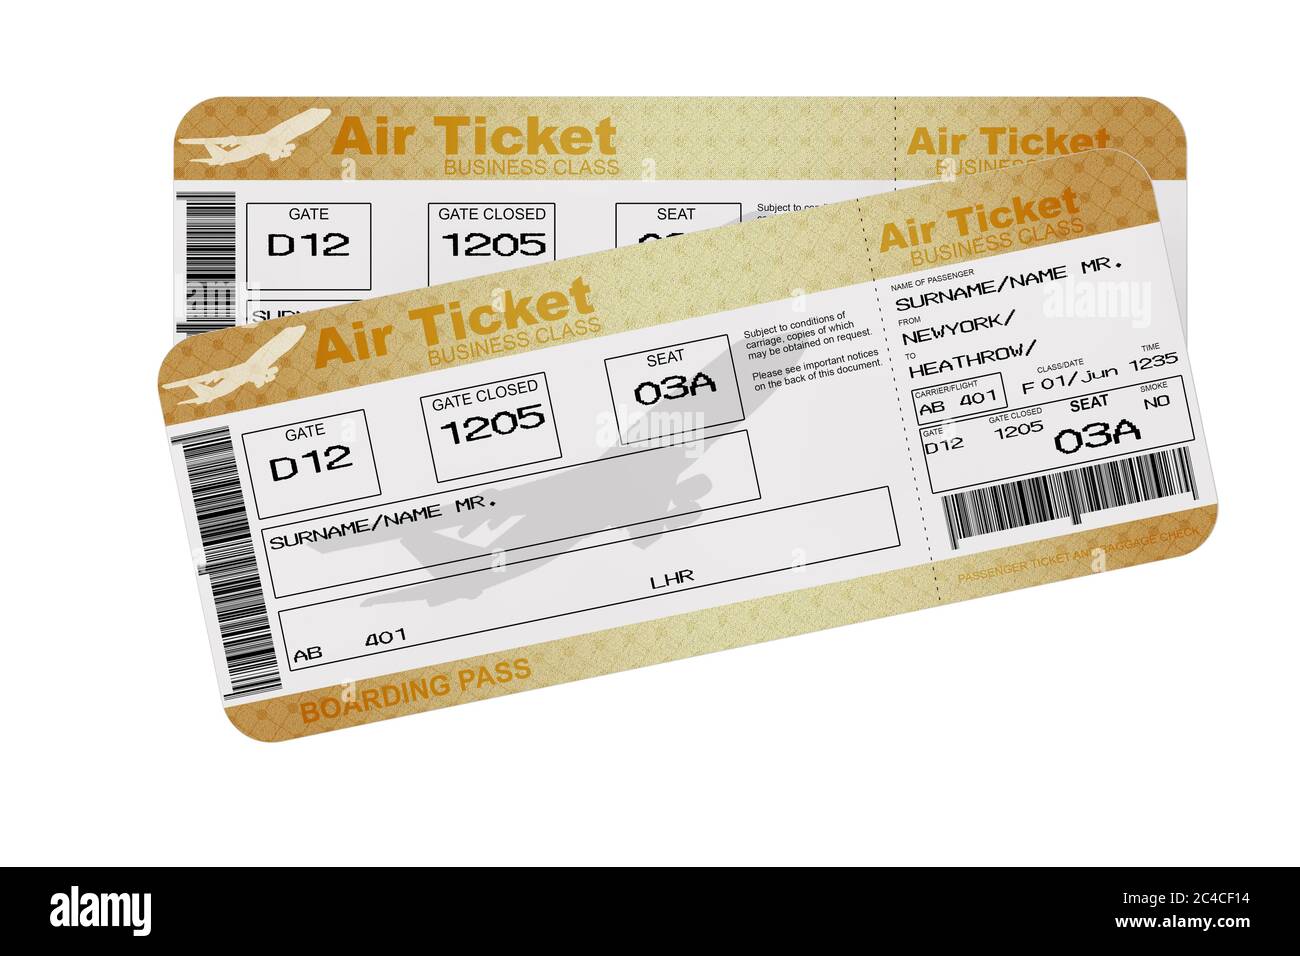 Аир билет на самолет. Посадочный талон:Business class. Air ticket 3 класс. Fly tickets. 1 Class ticket.